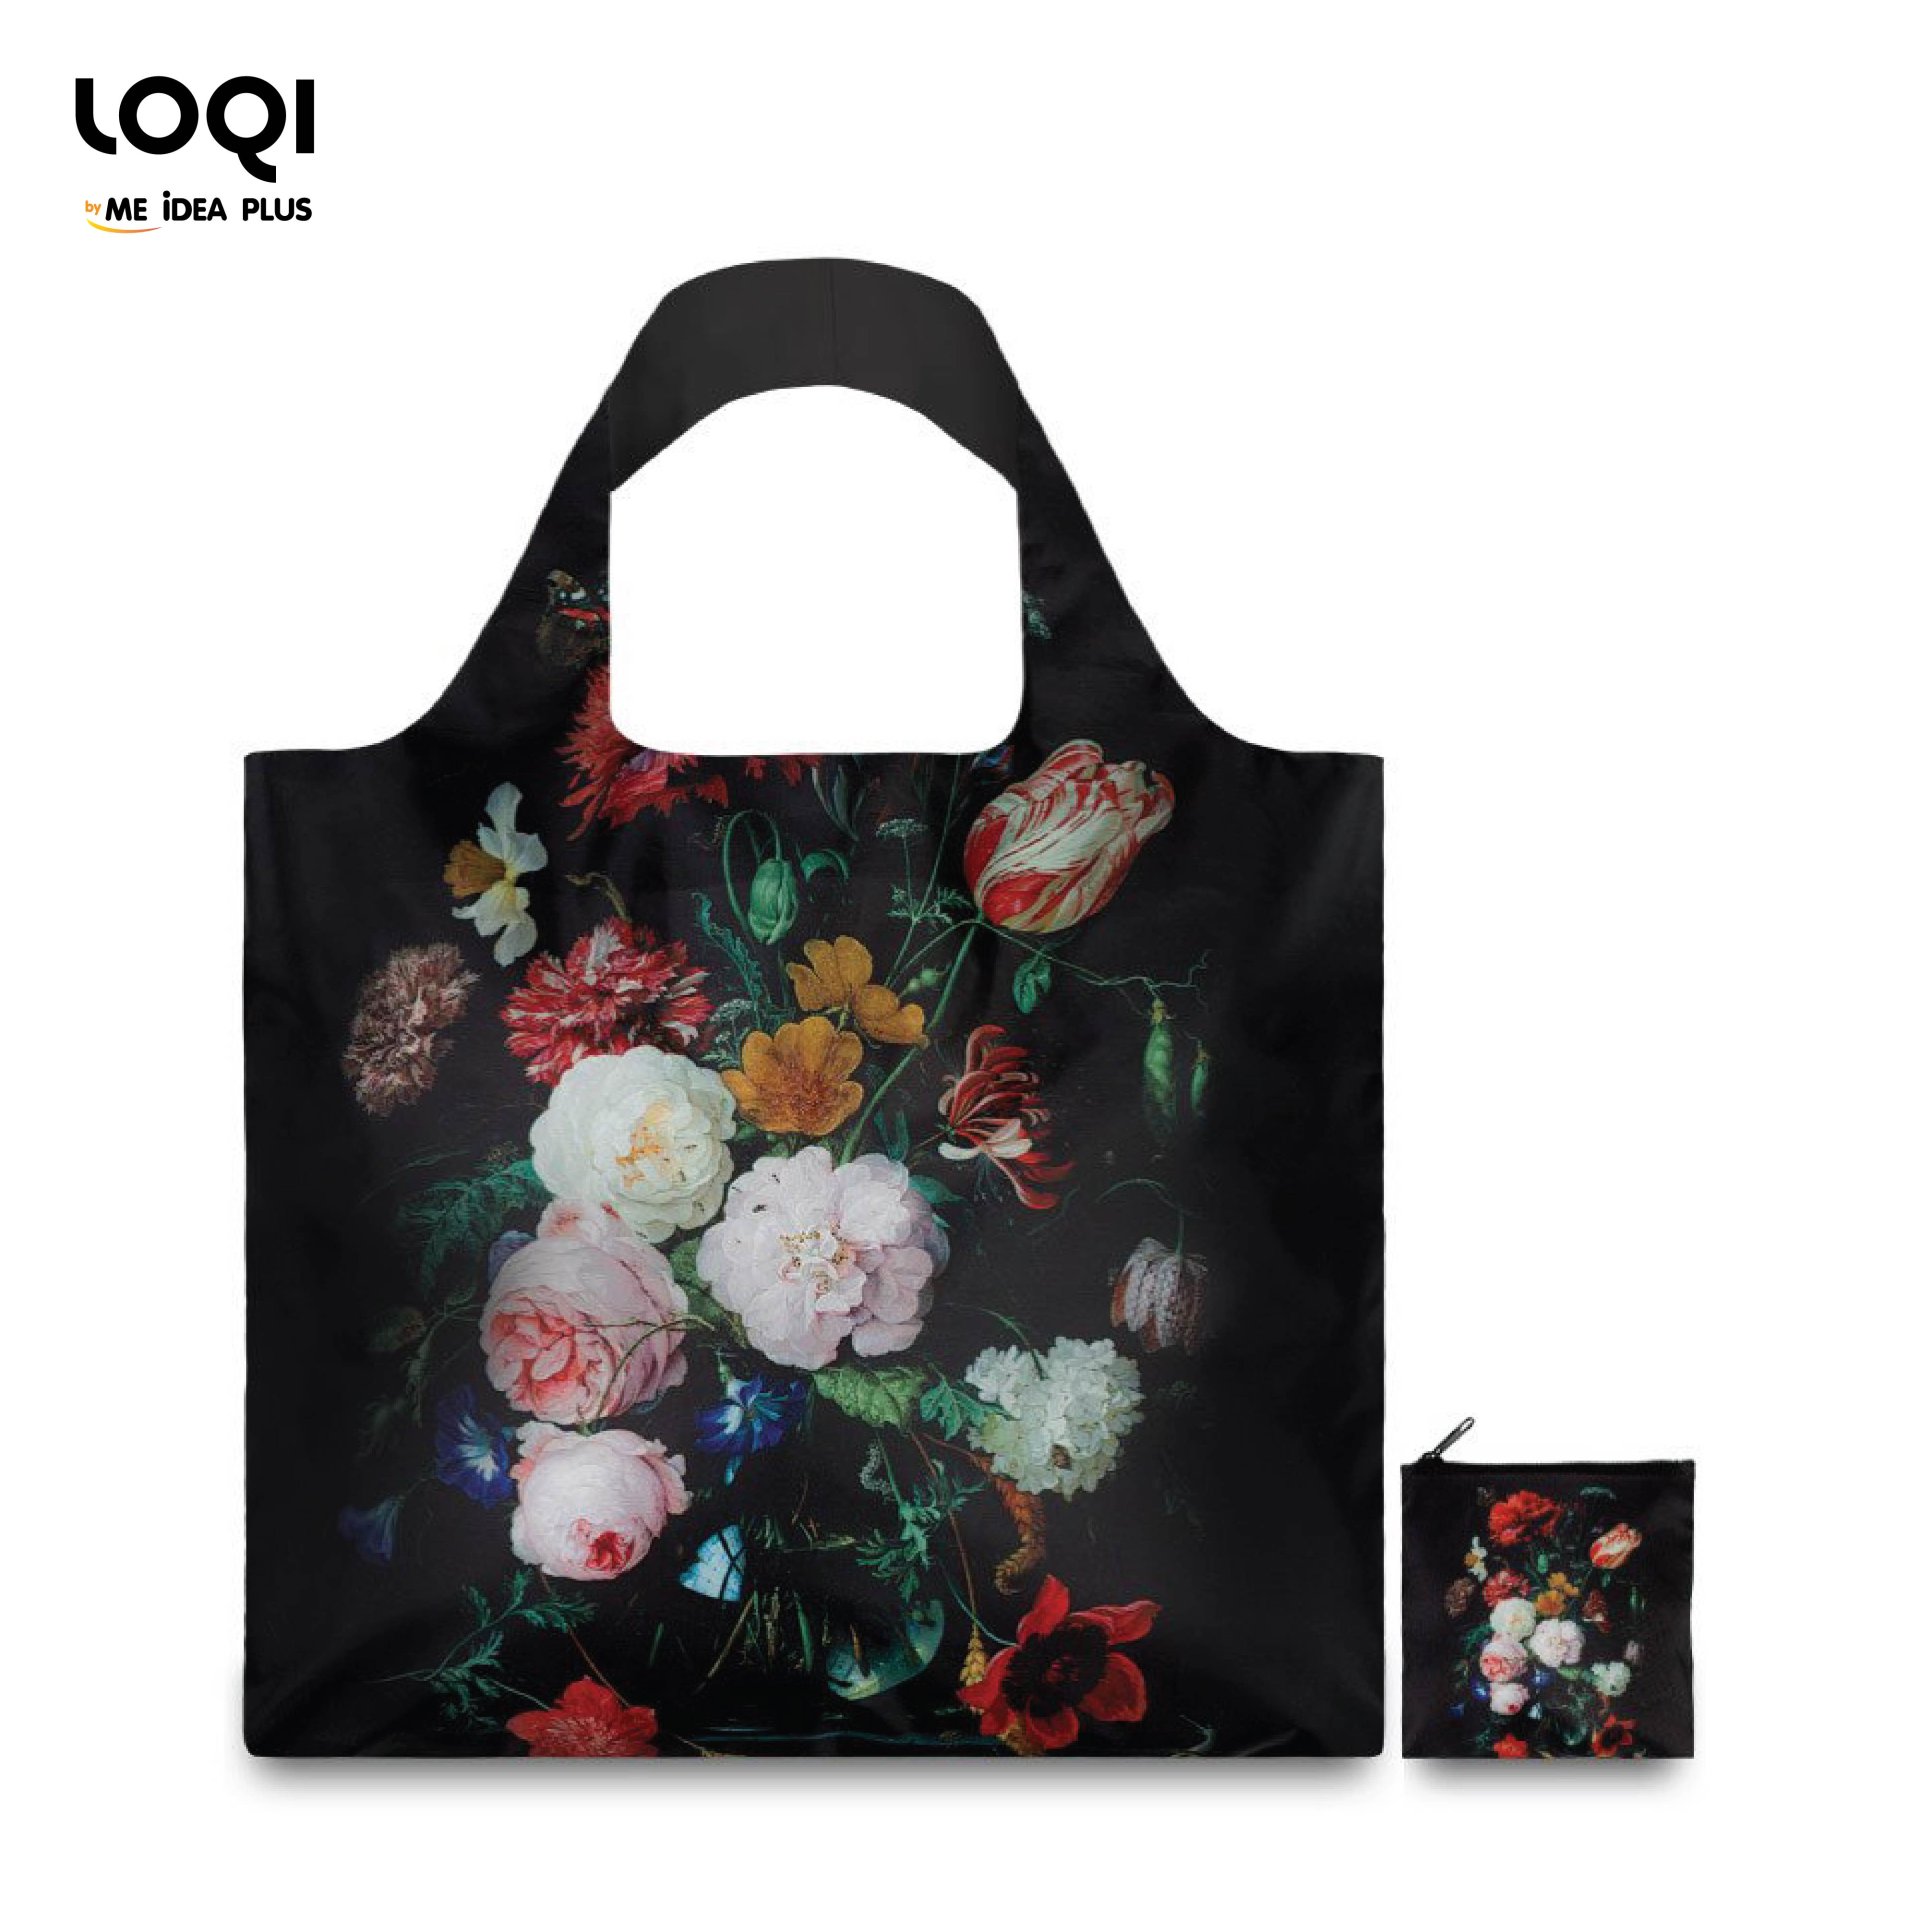 LOQI Museum Vincent Van Gogh's Vase with Sunflowers Reusable Shopping Bag